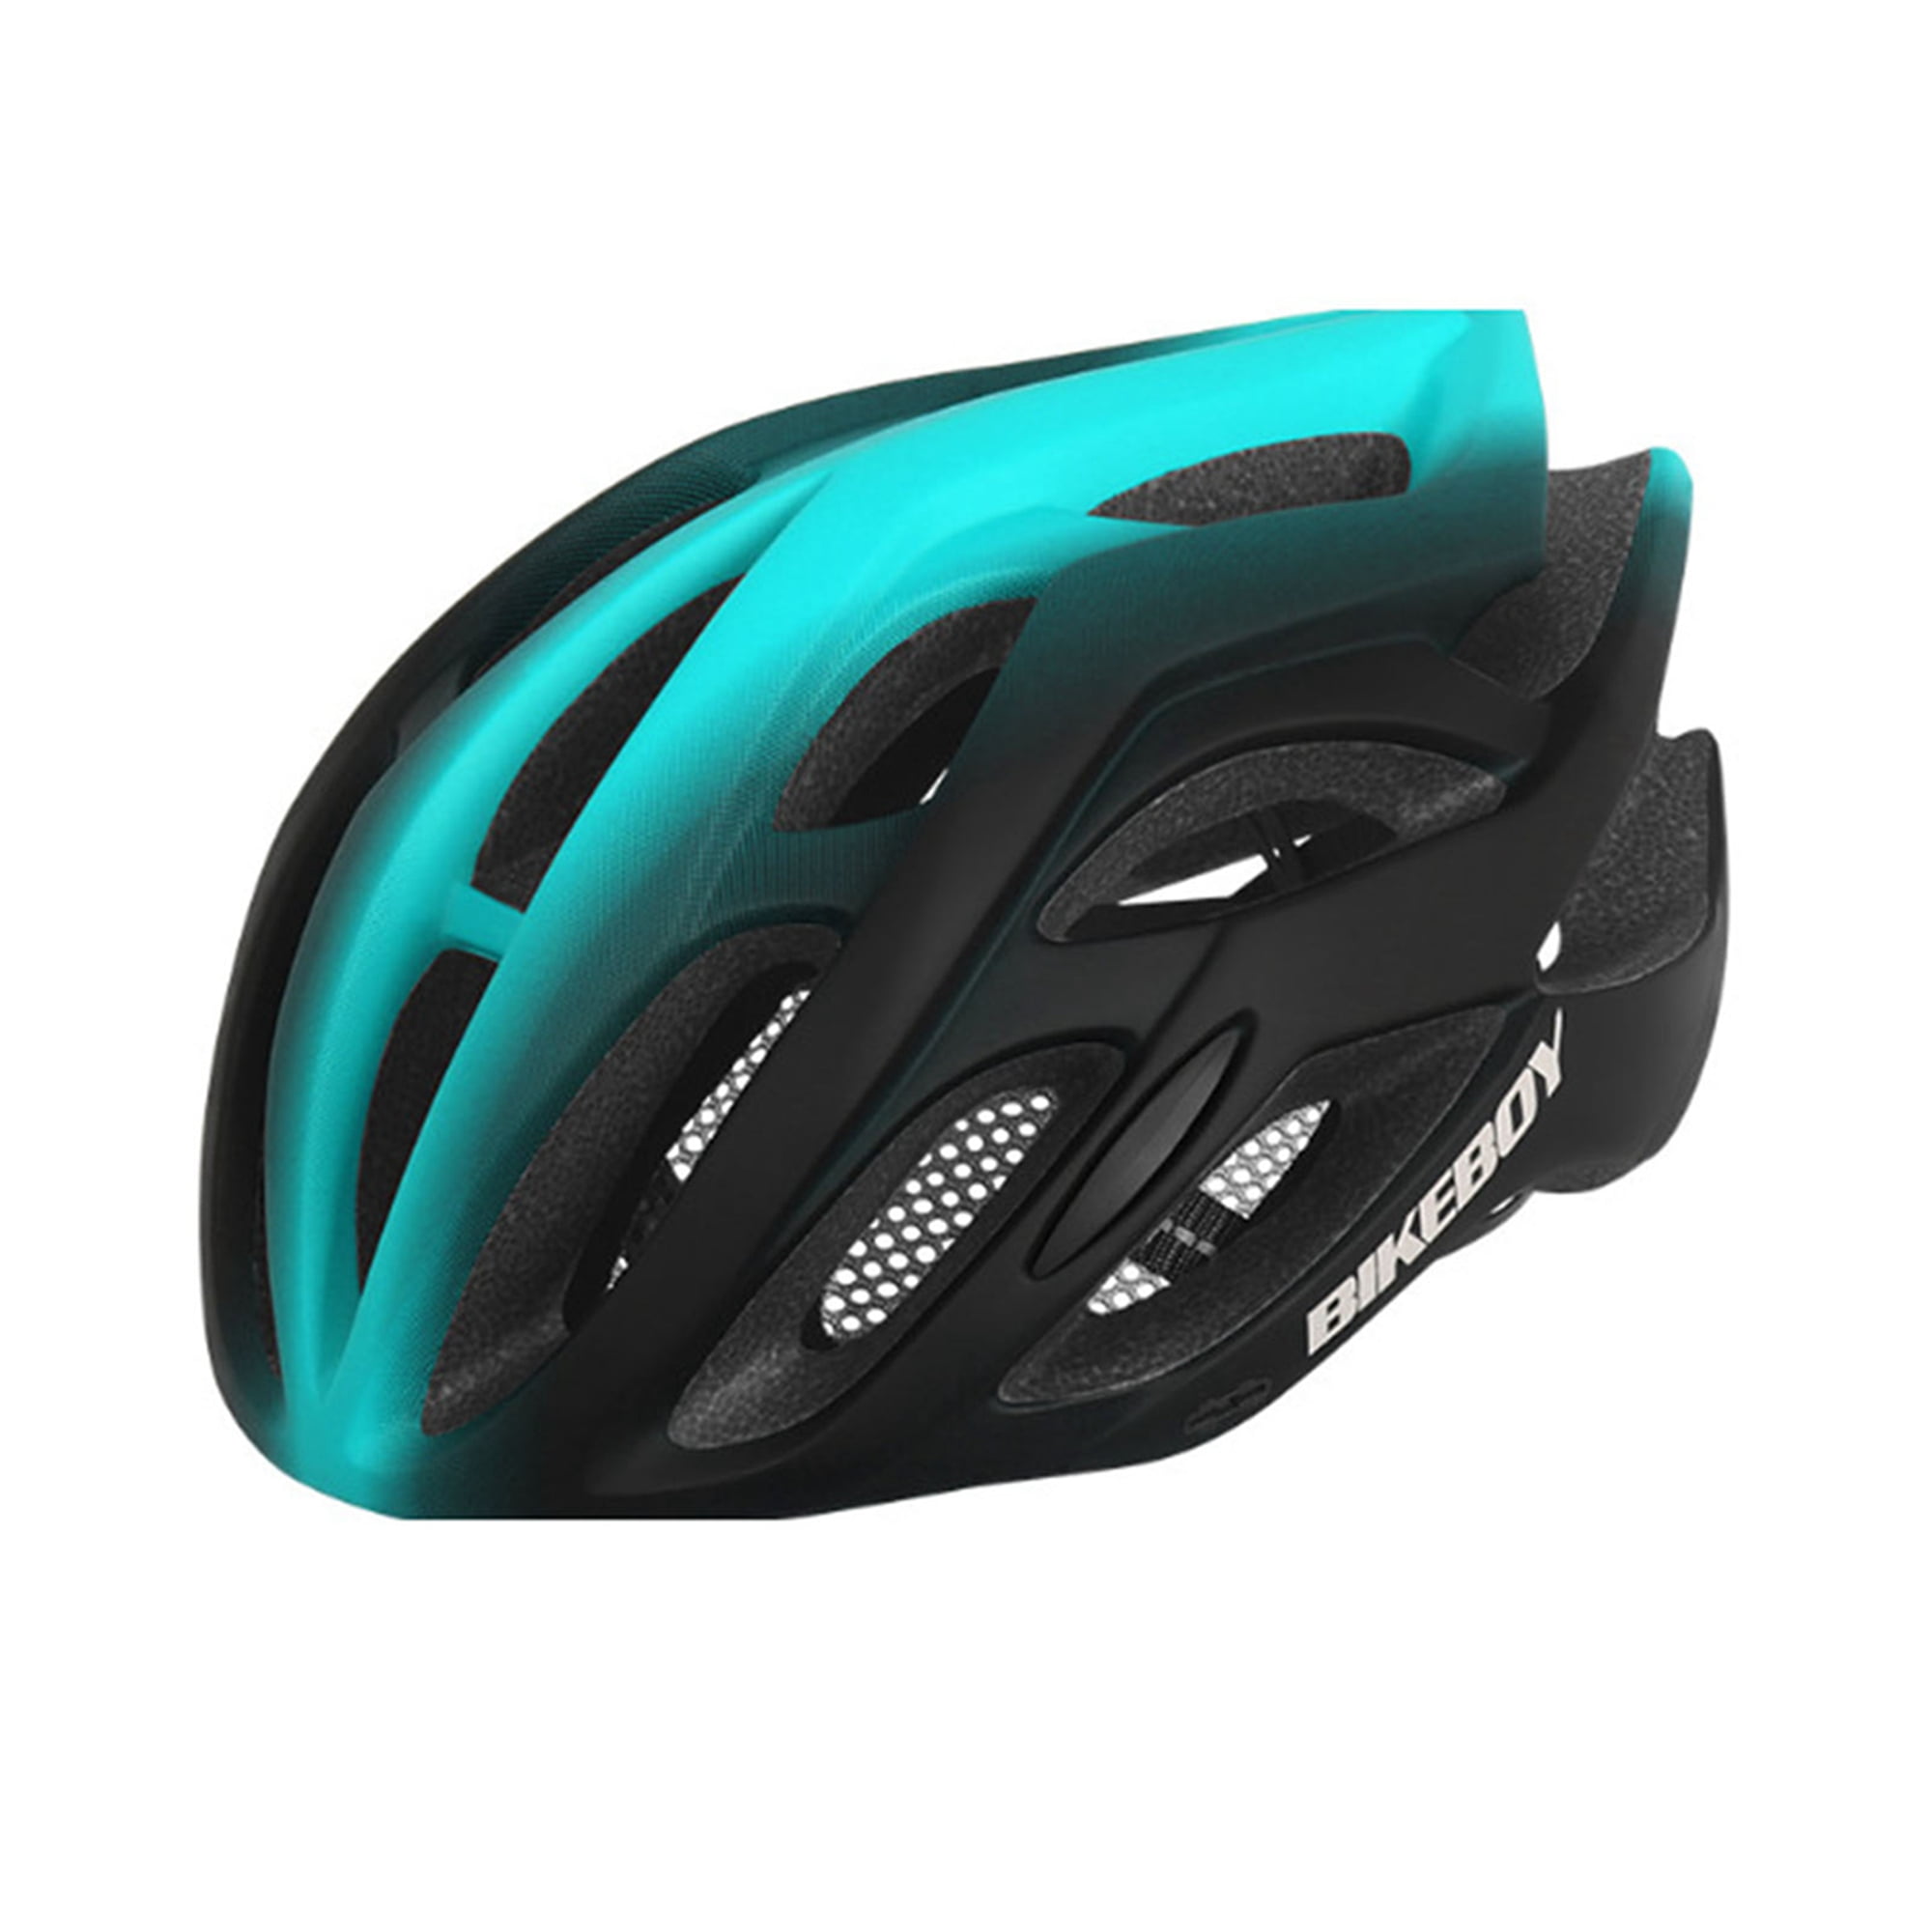 Safe Mountain bicycle Helmet GUB XX6 Adjustable Bike Safety Integrally-molded 